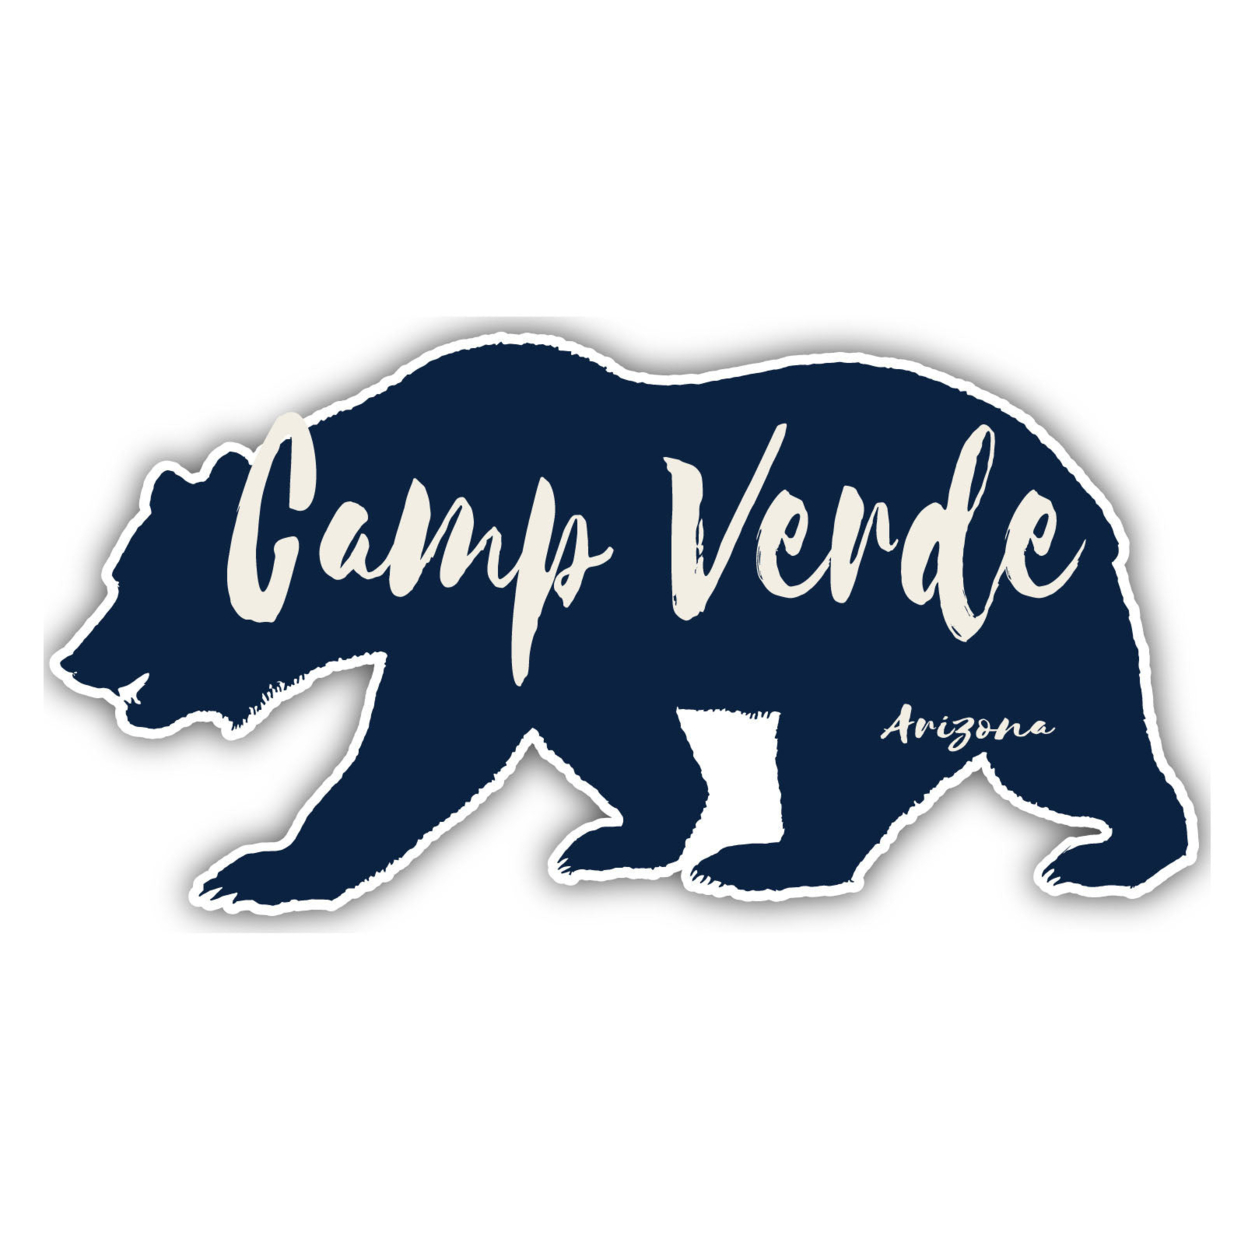 Camp Verde Arizona Souvenir Decorative Stickers (Choose Theme And Size) - Single Unit, 8-Inch, Bear